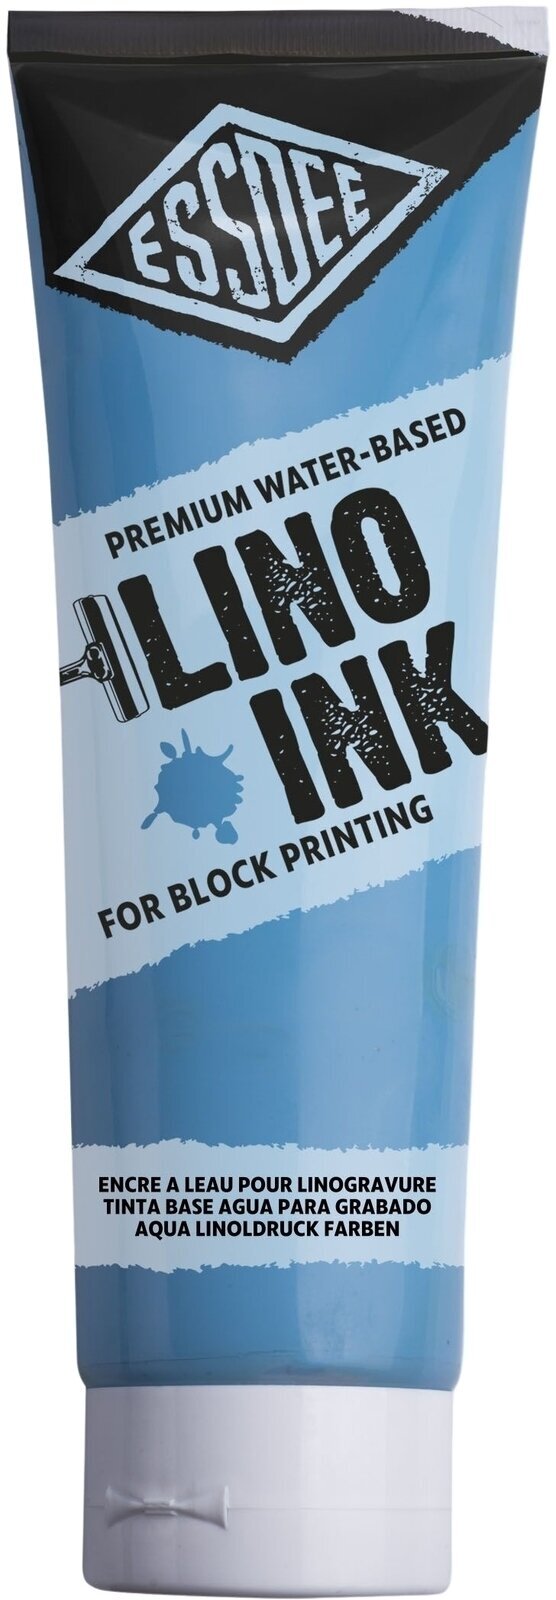 Paint For Linocut Essdee Block Printing Ink Paint For Linocut Sky Blue 300 ml